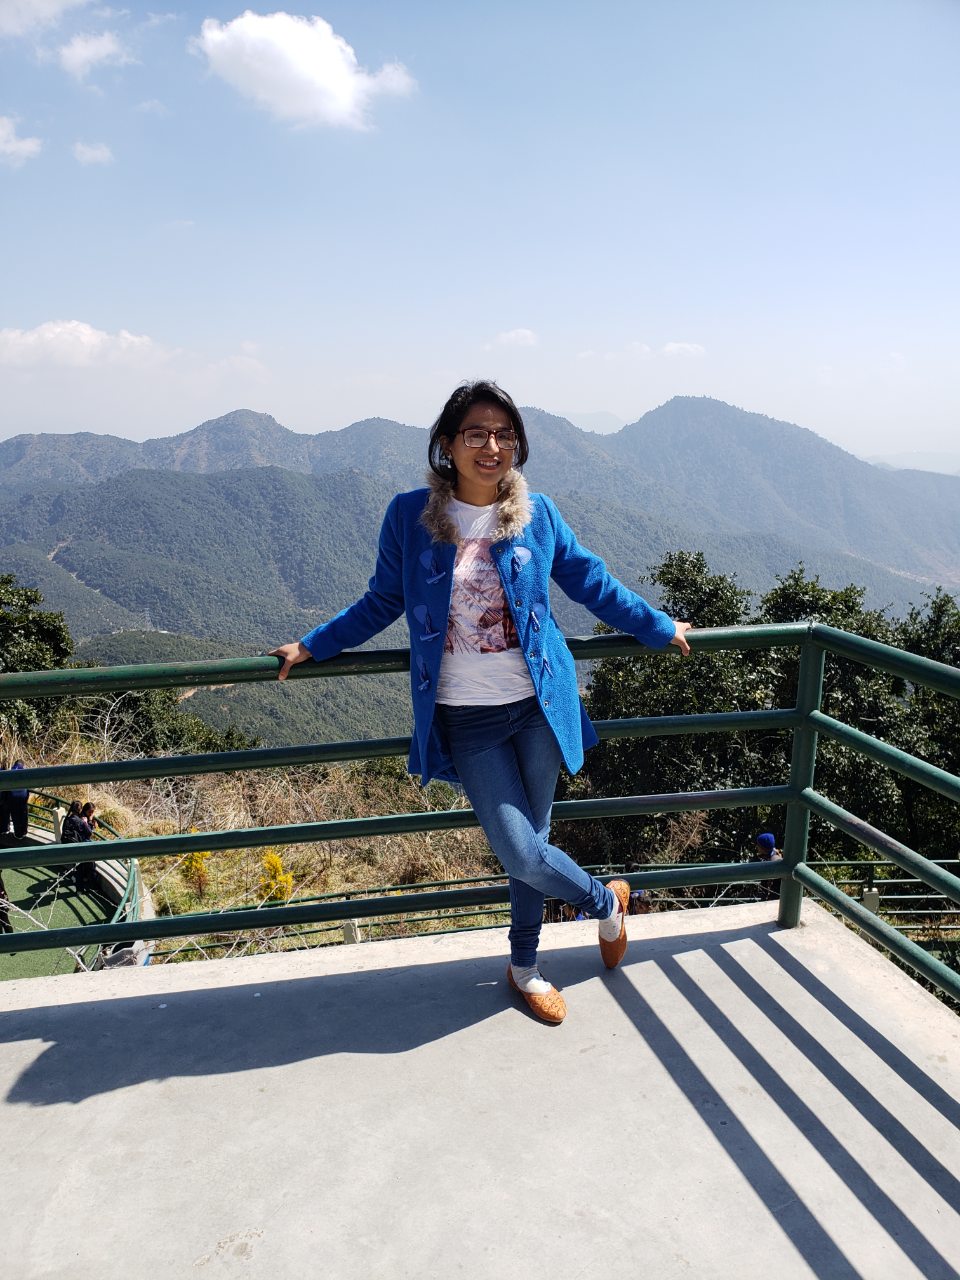 Sunita from Nepal